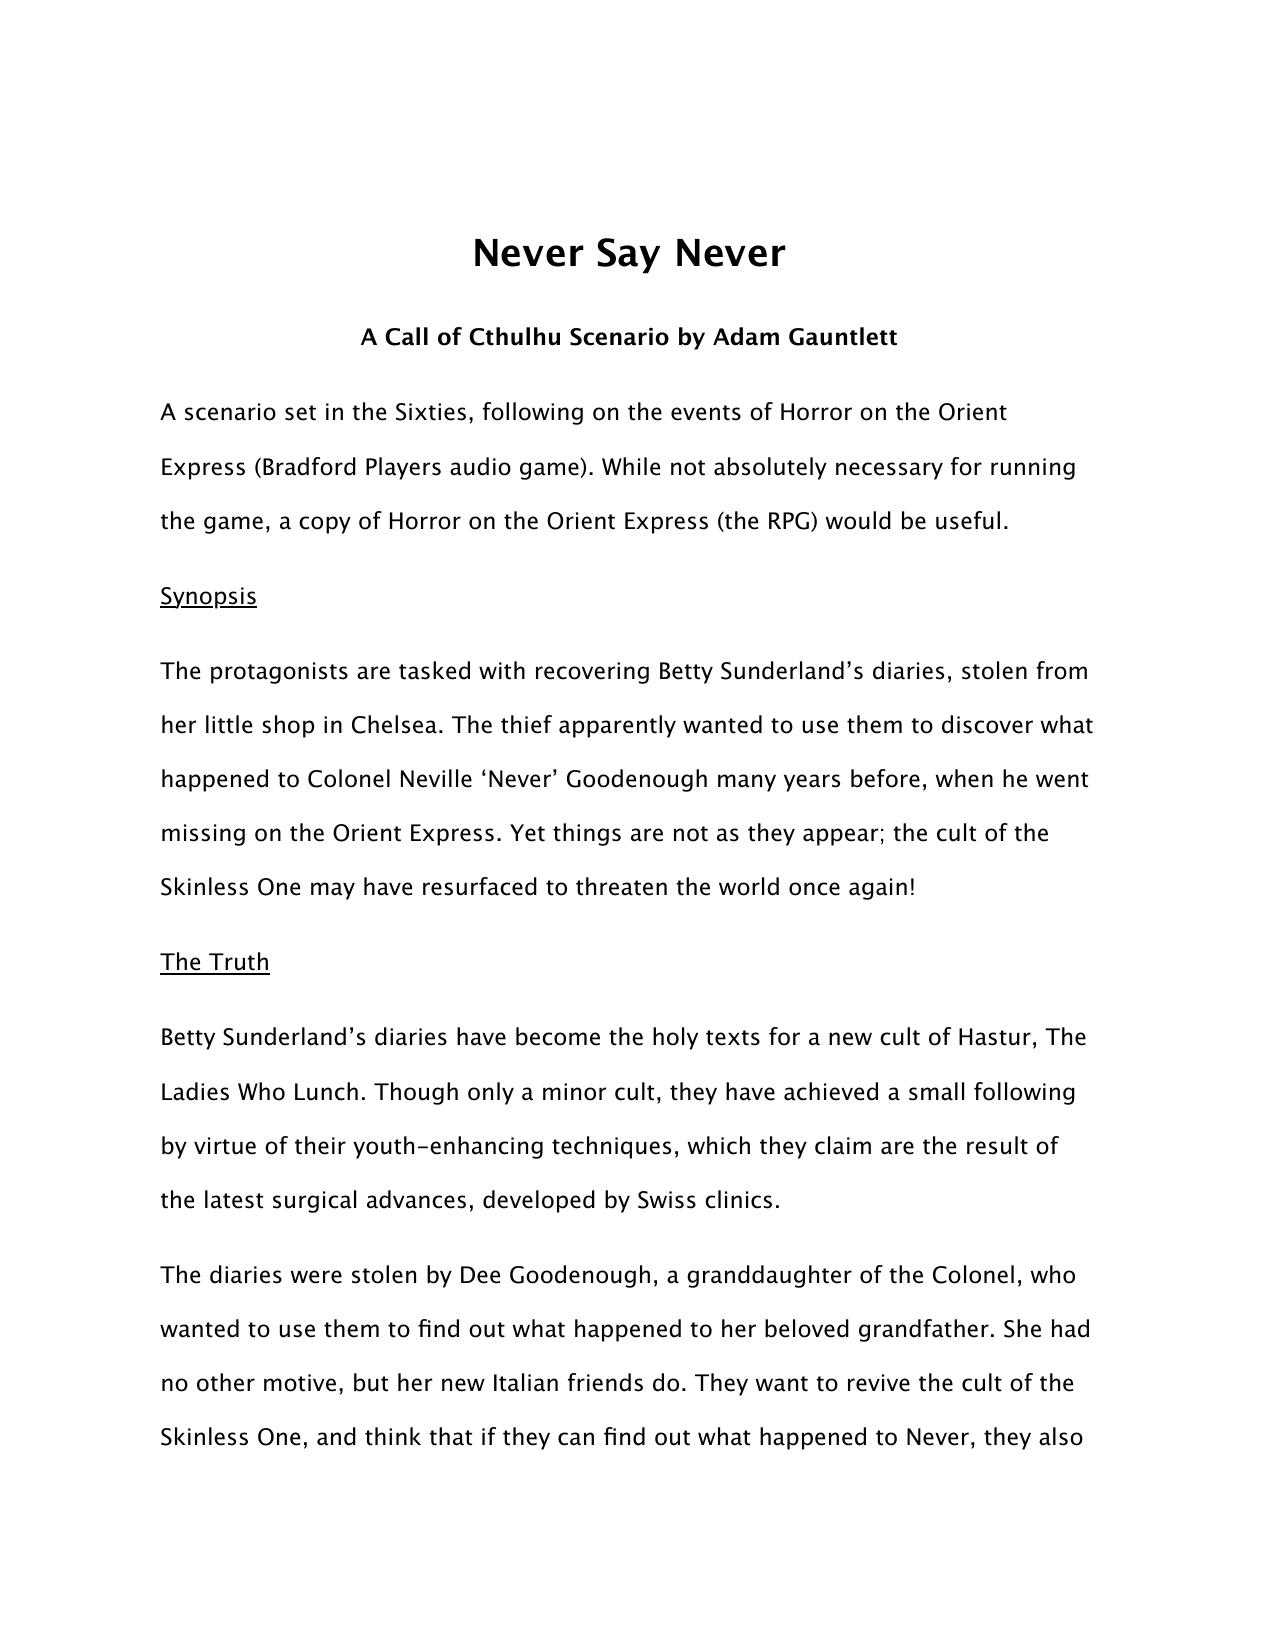 scenario-never-say-never